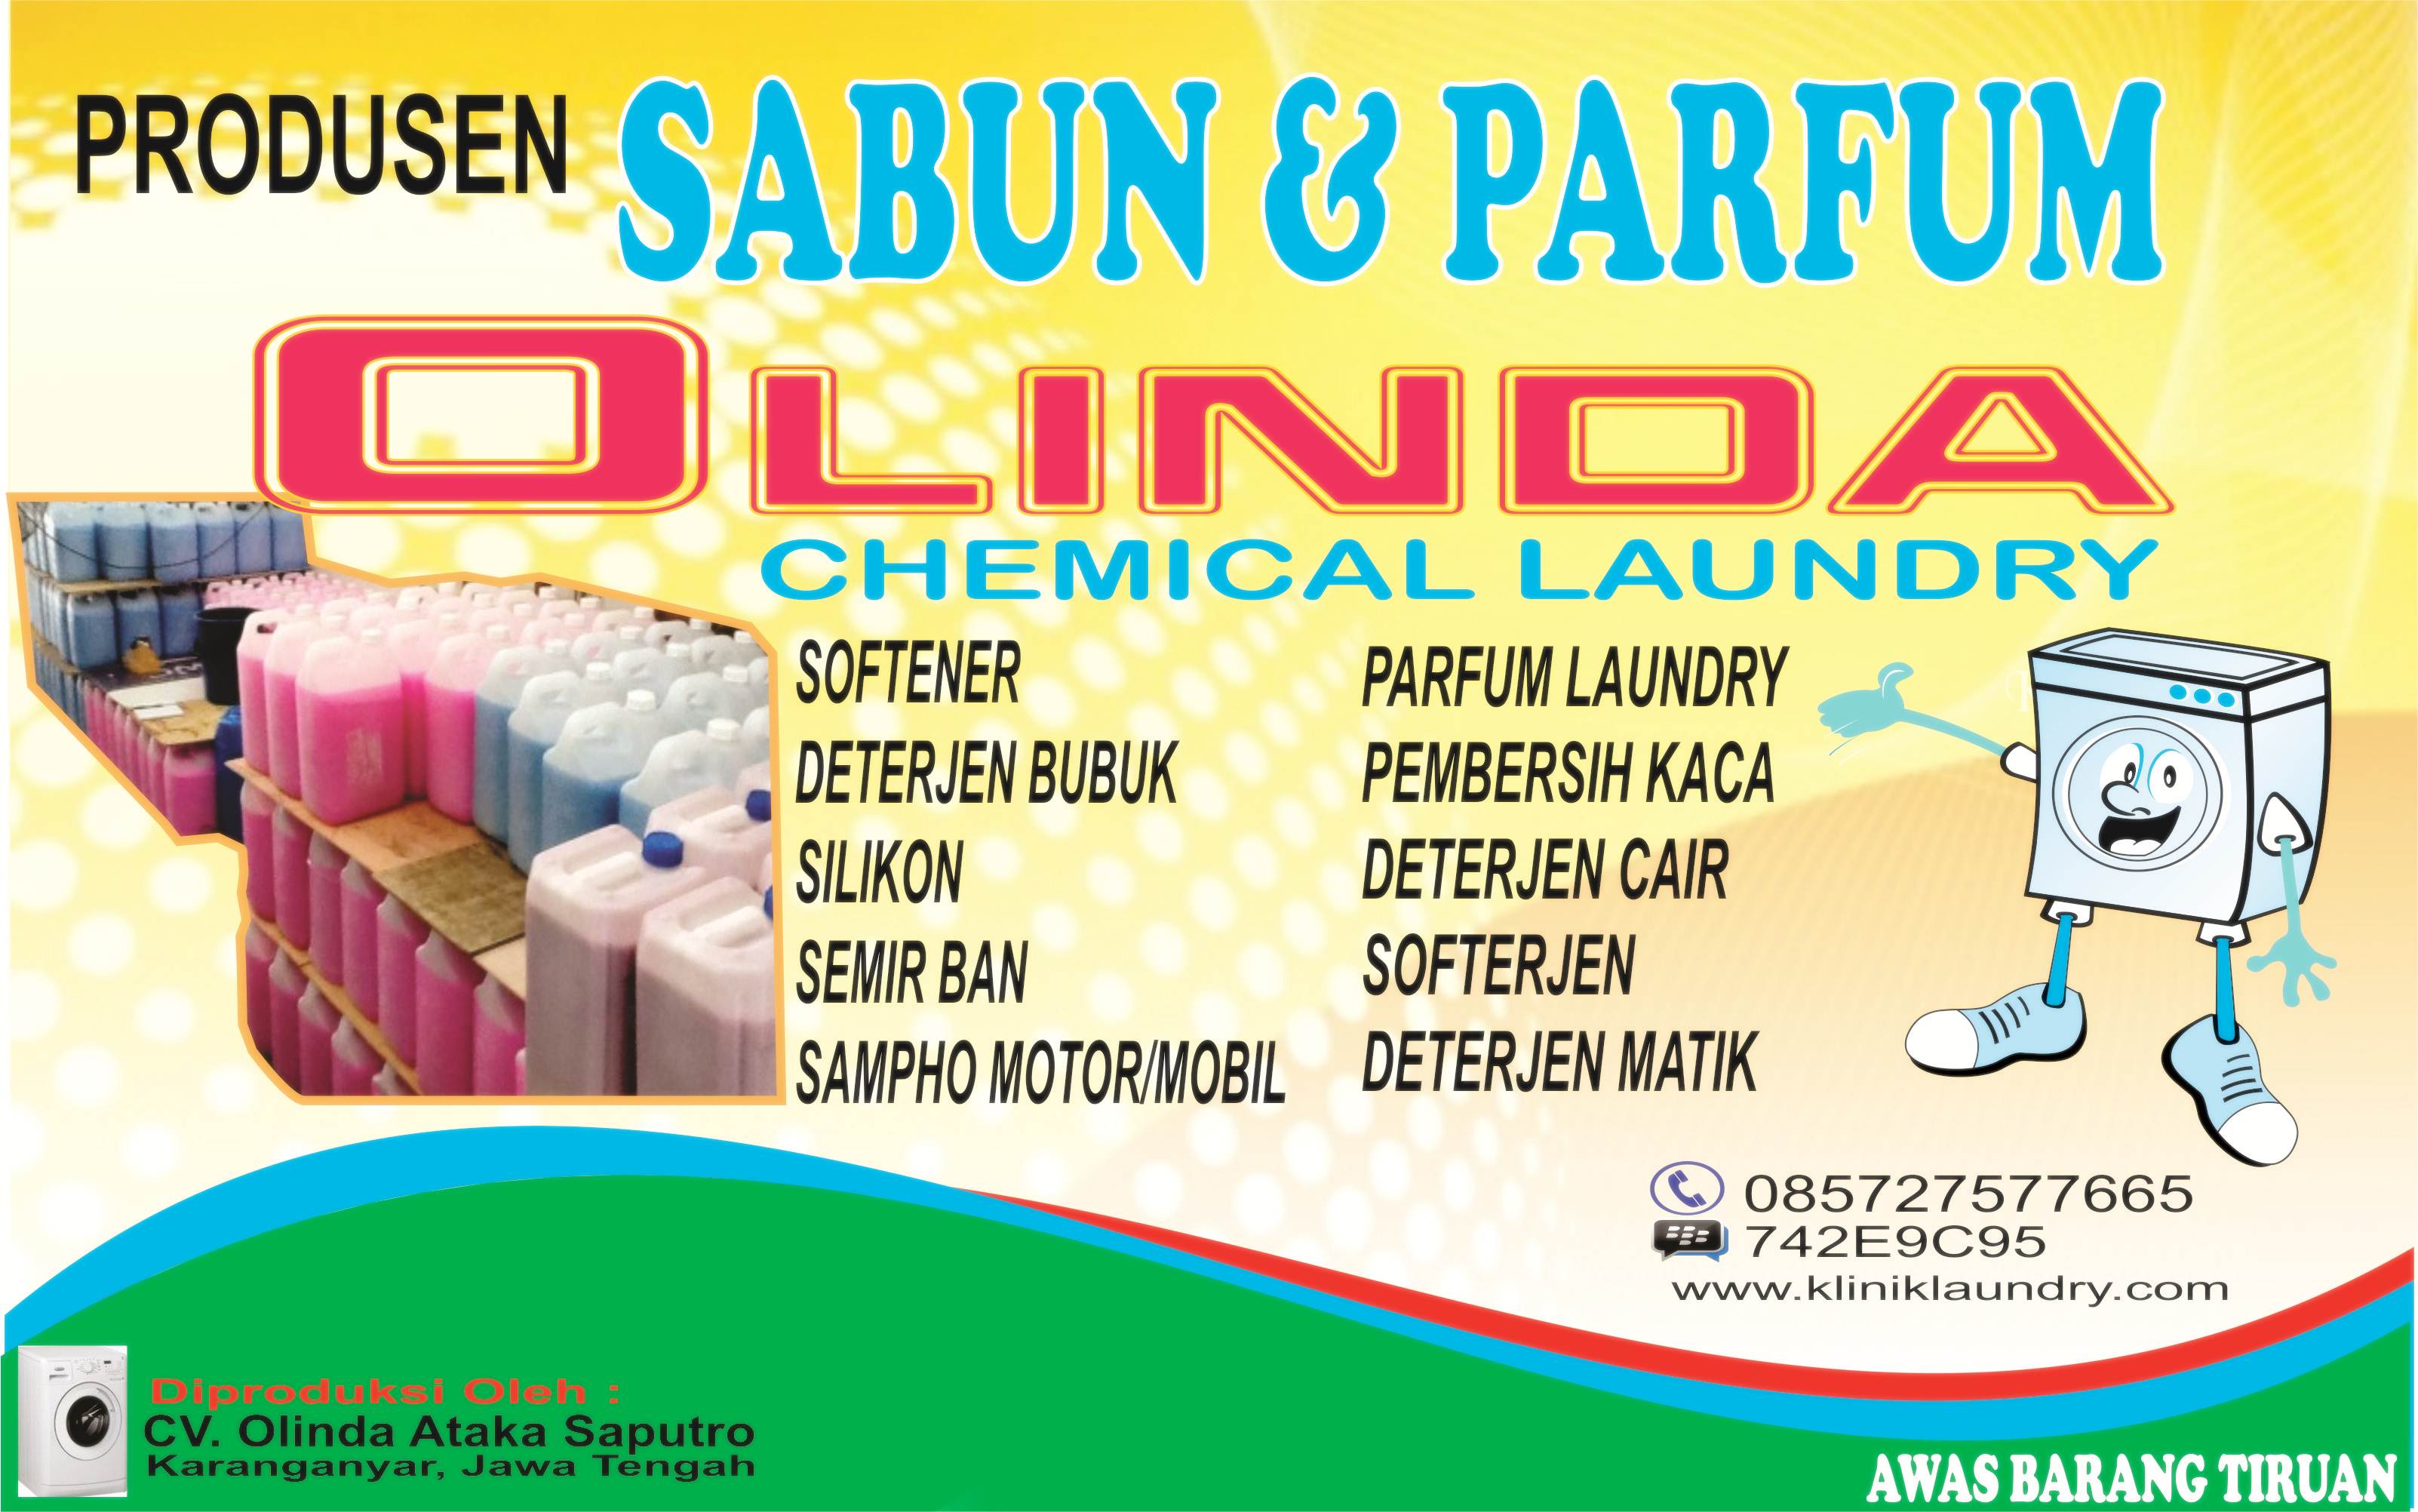 kliniklaundry Chemical Equipment Supplier laundry 